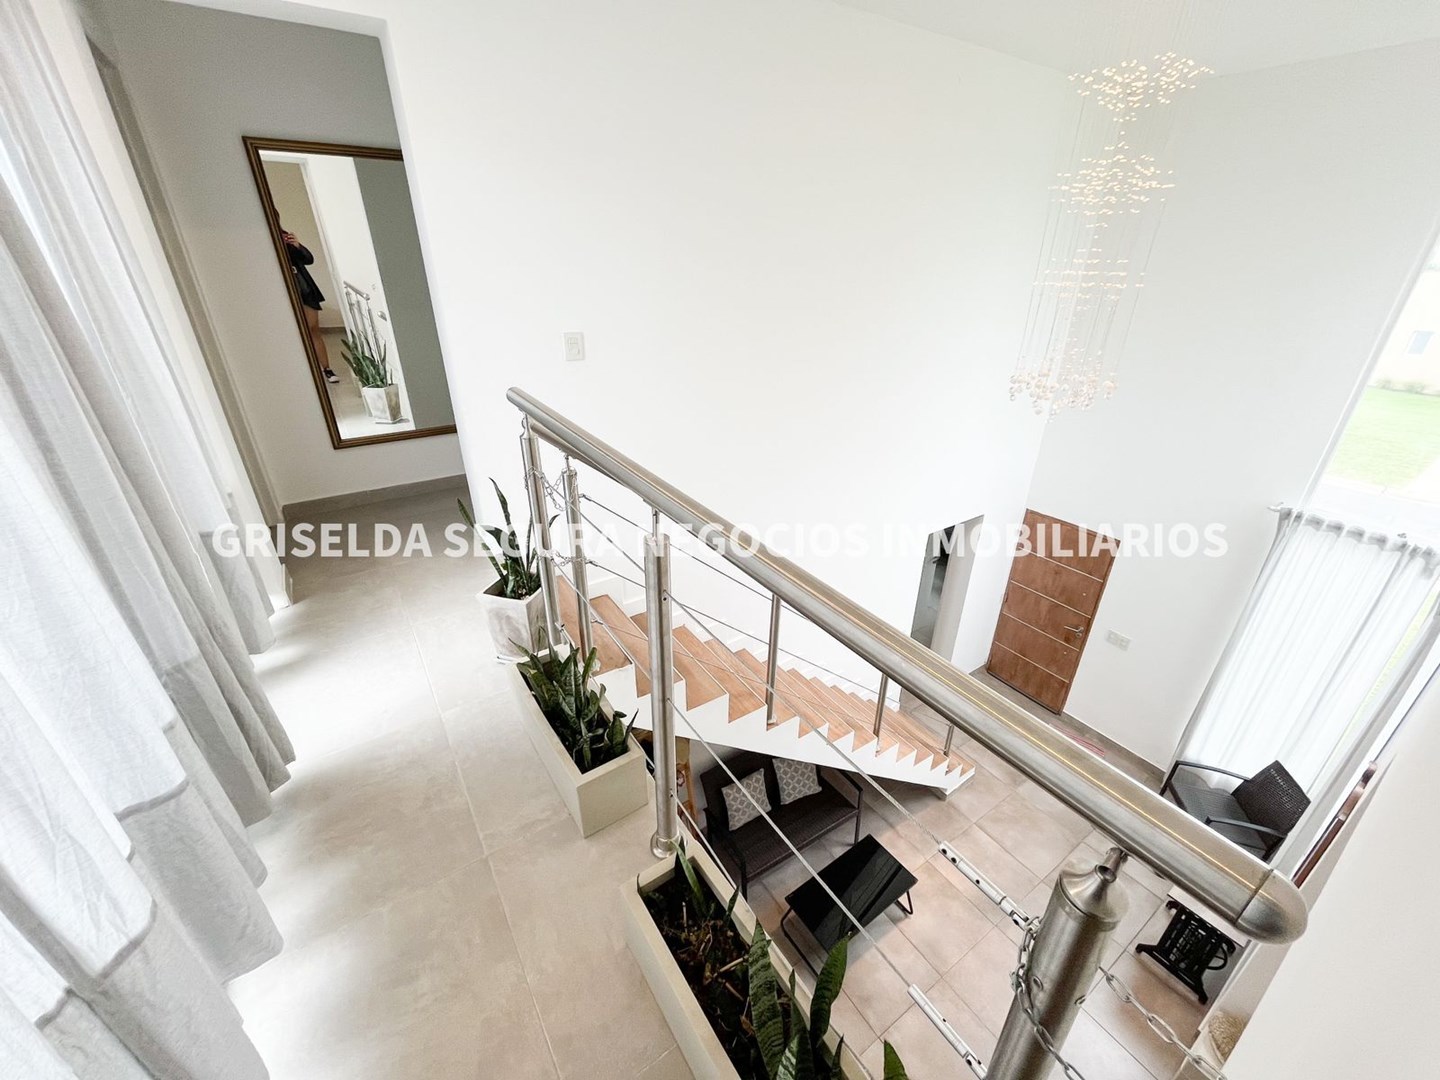 #4985614 | Temporary Rental | House | San Sebastian (Griselda Segura Negocios Inmobiliarios)